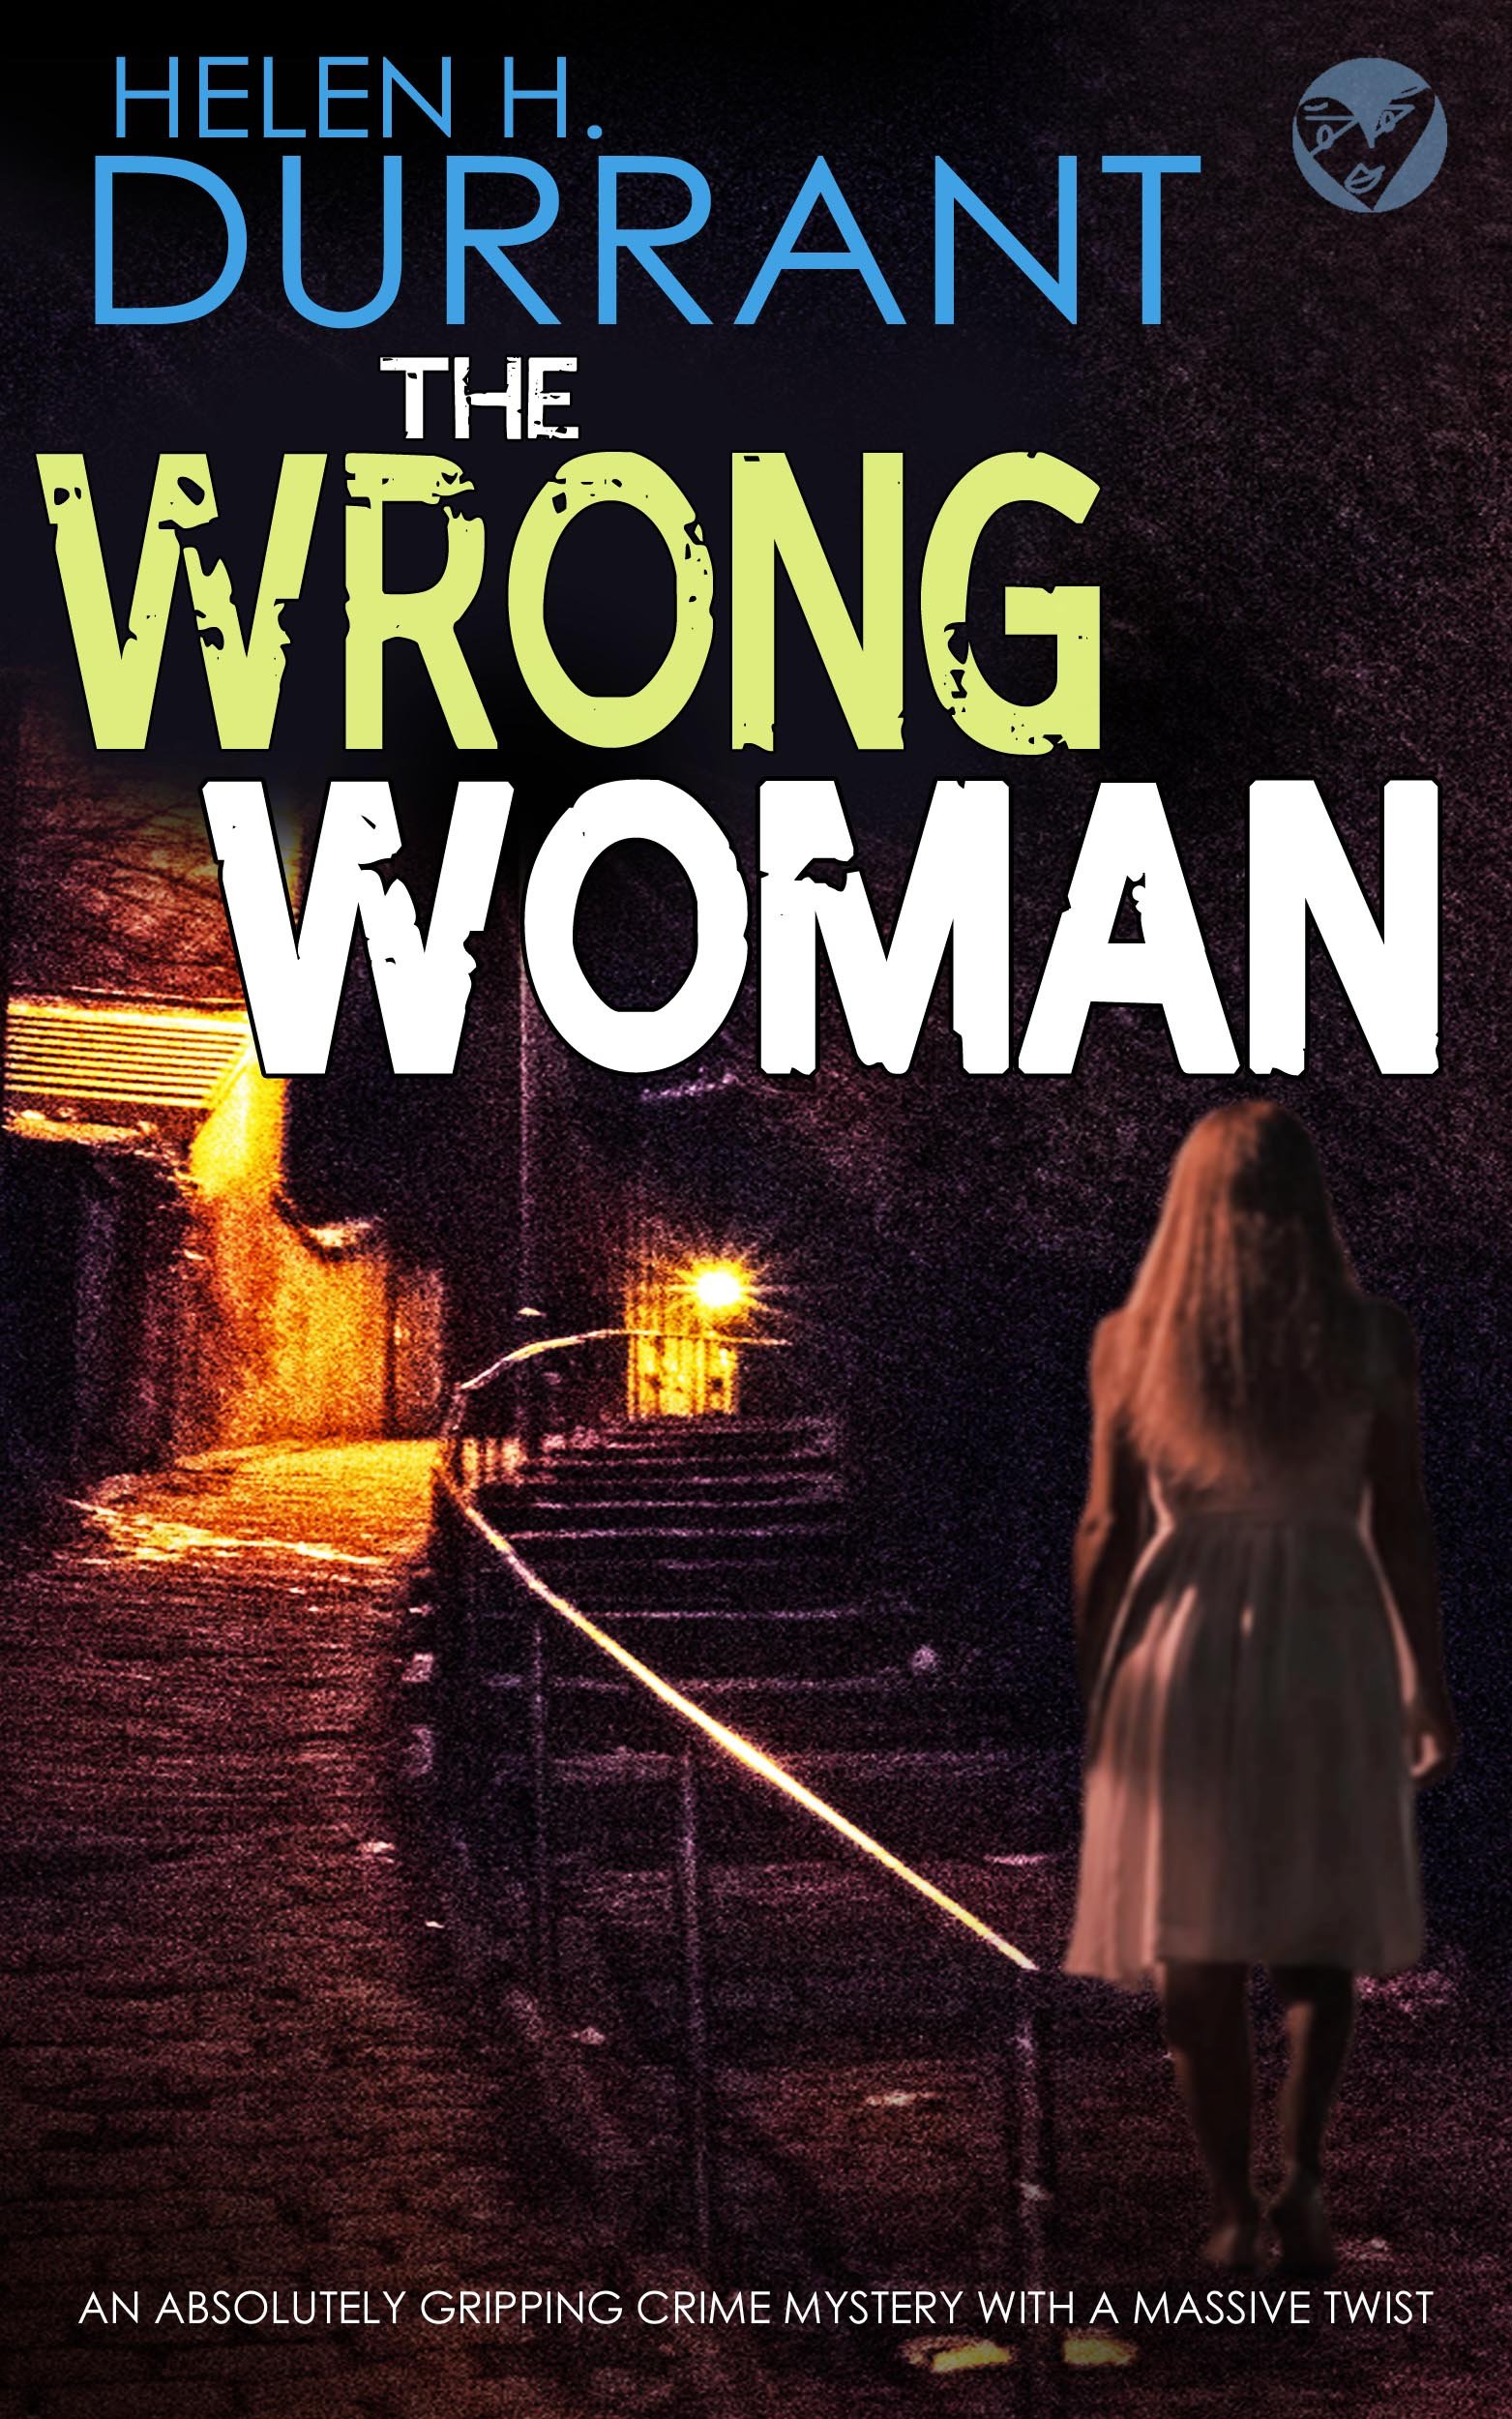 THE WRONG WOMAN (2).jpg